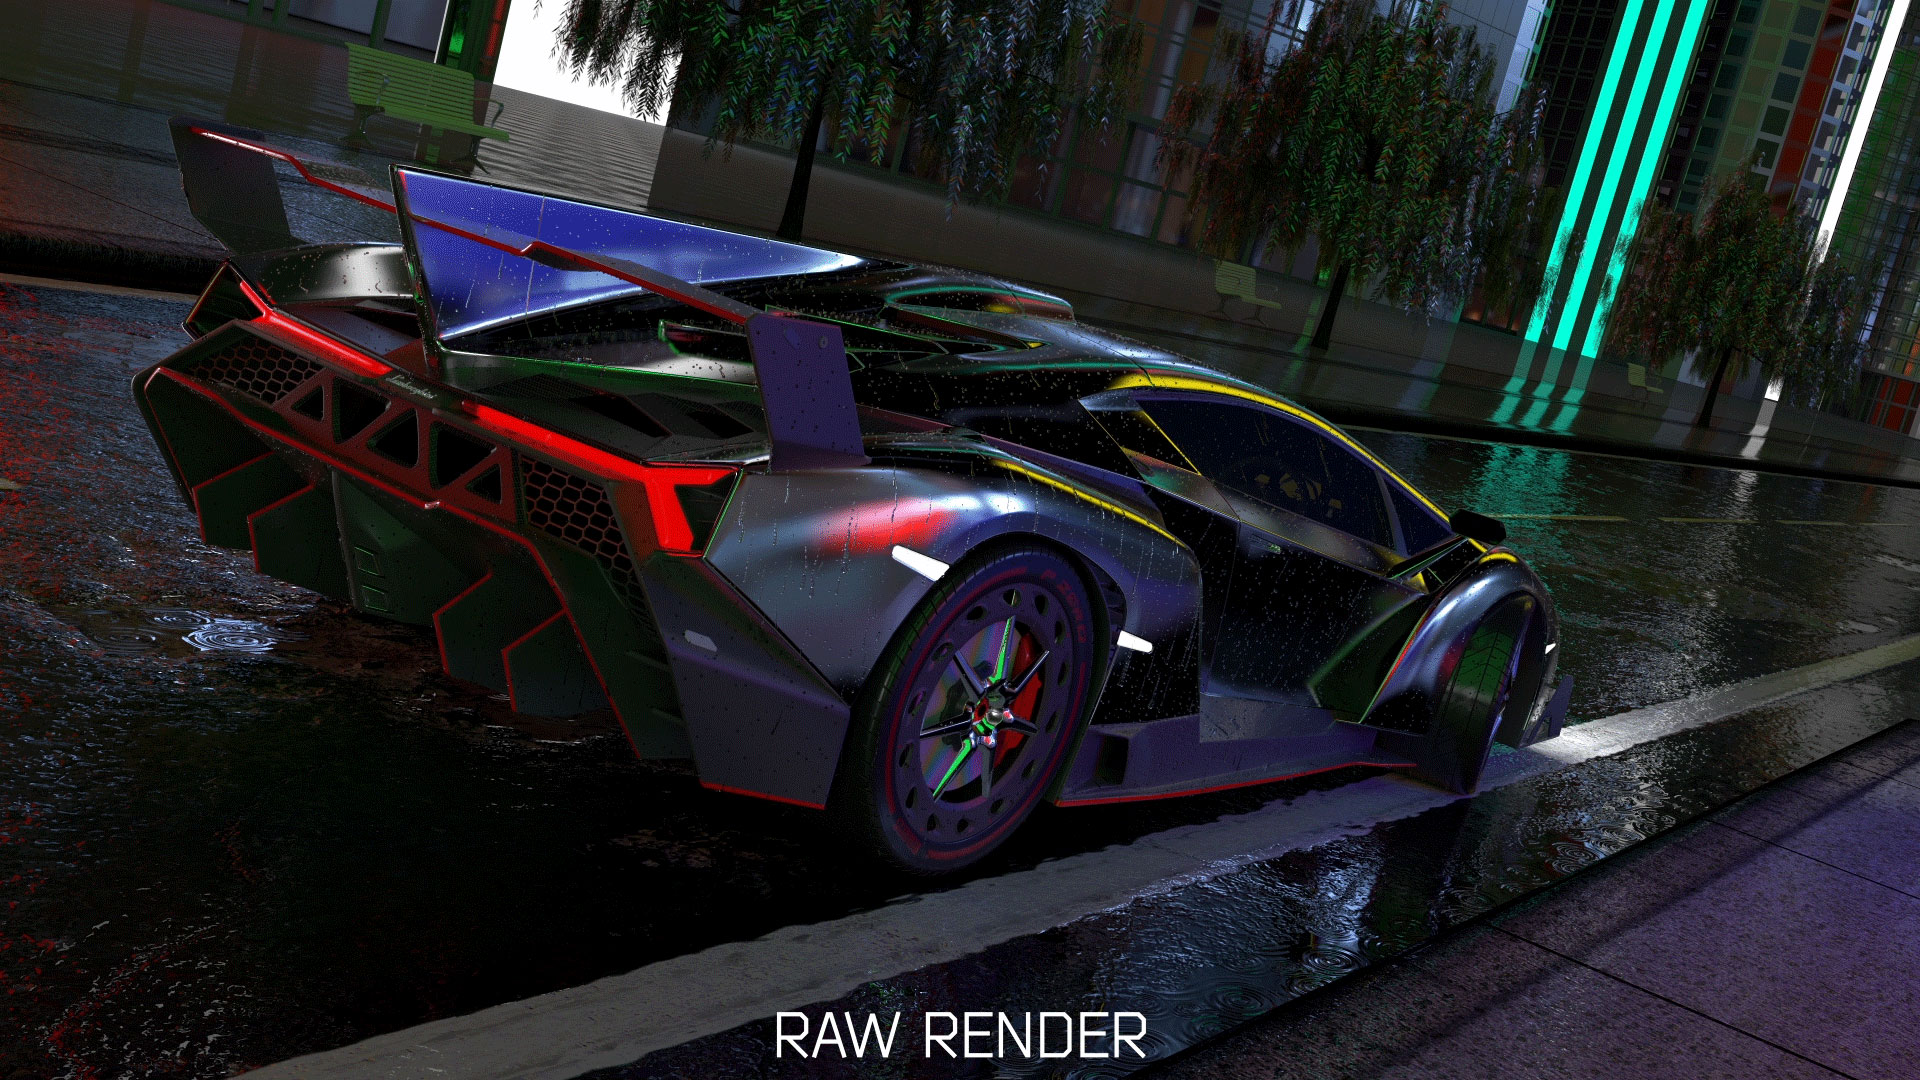 Raw render